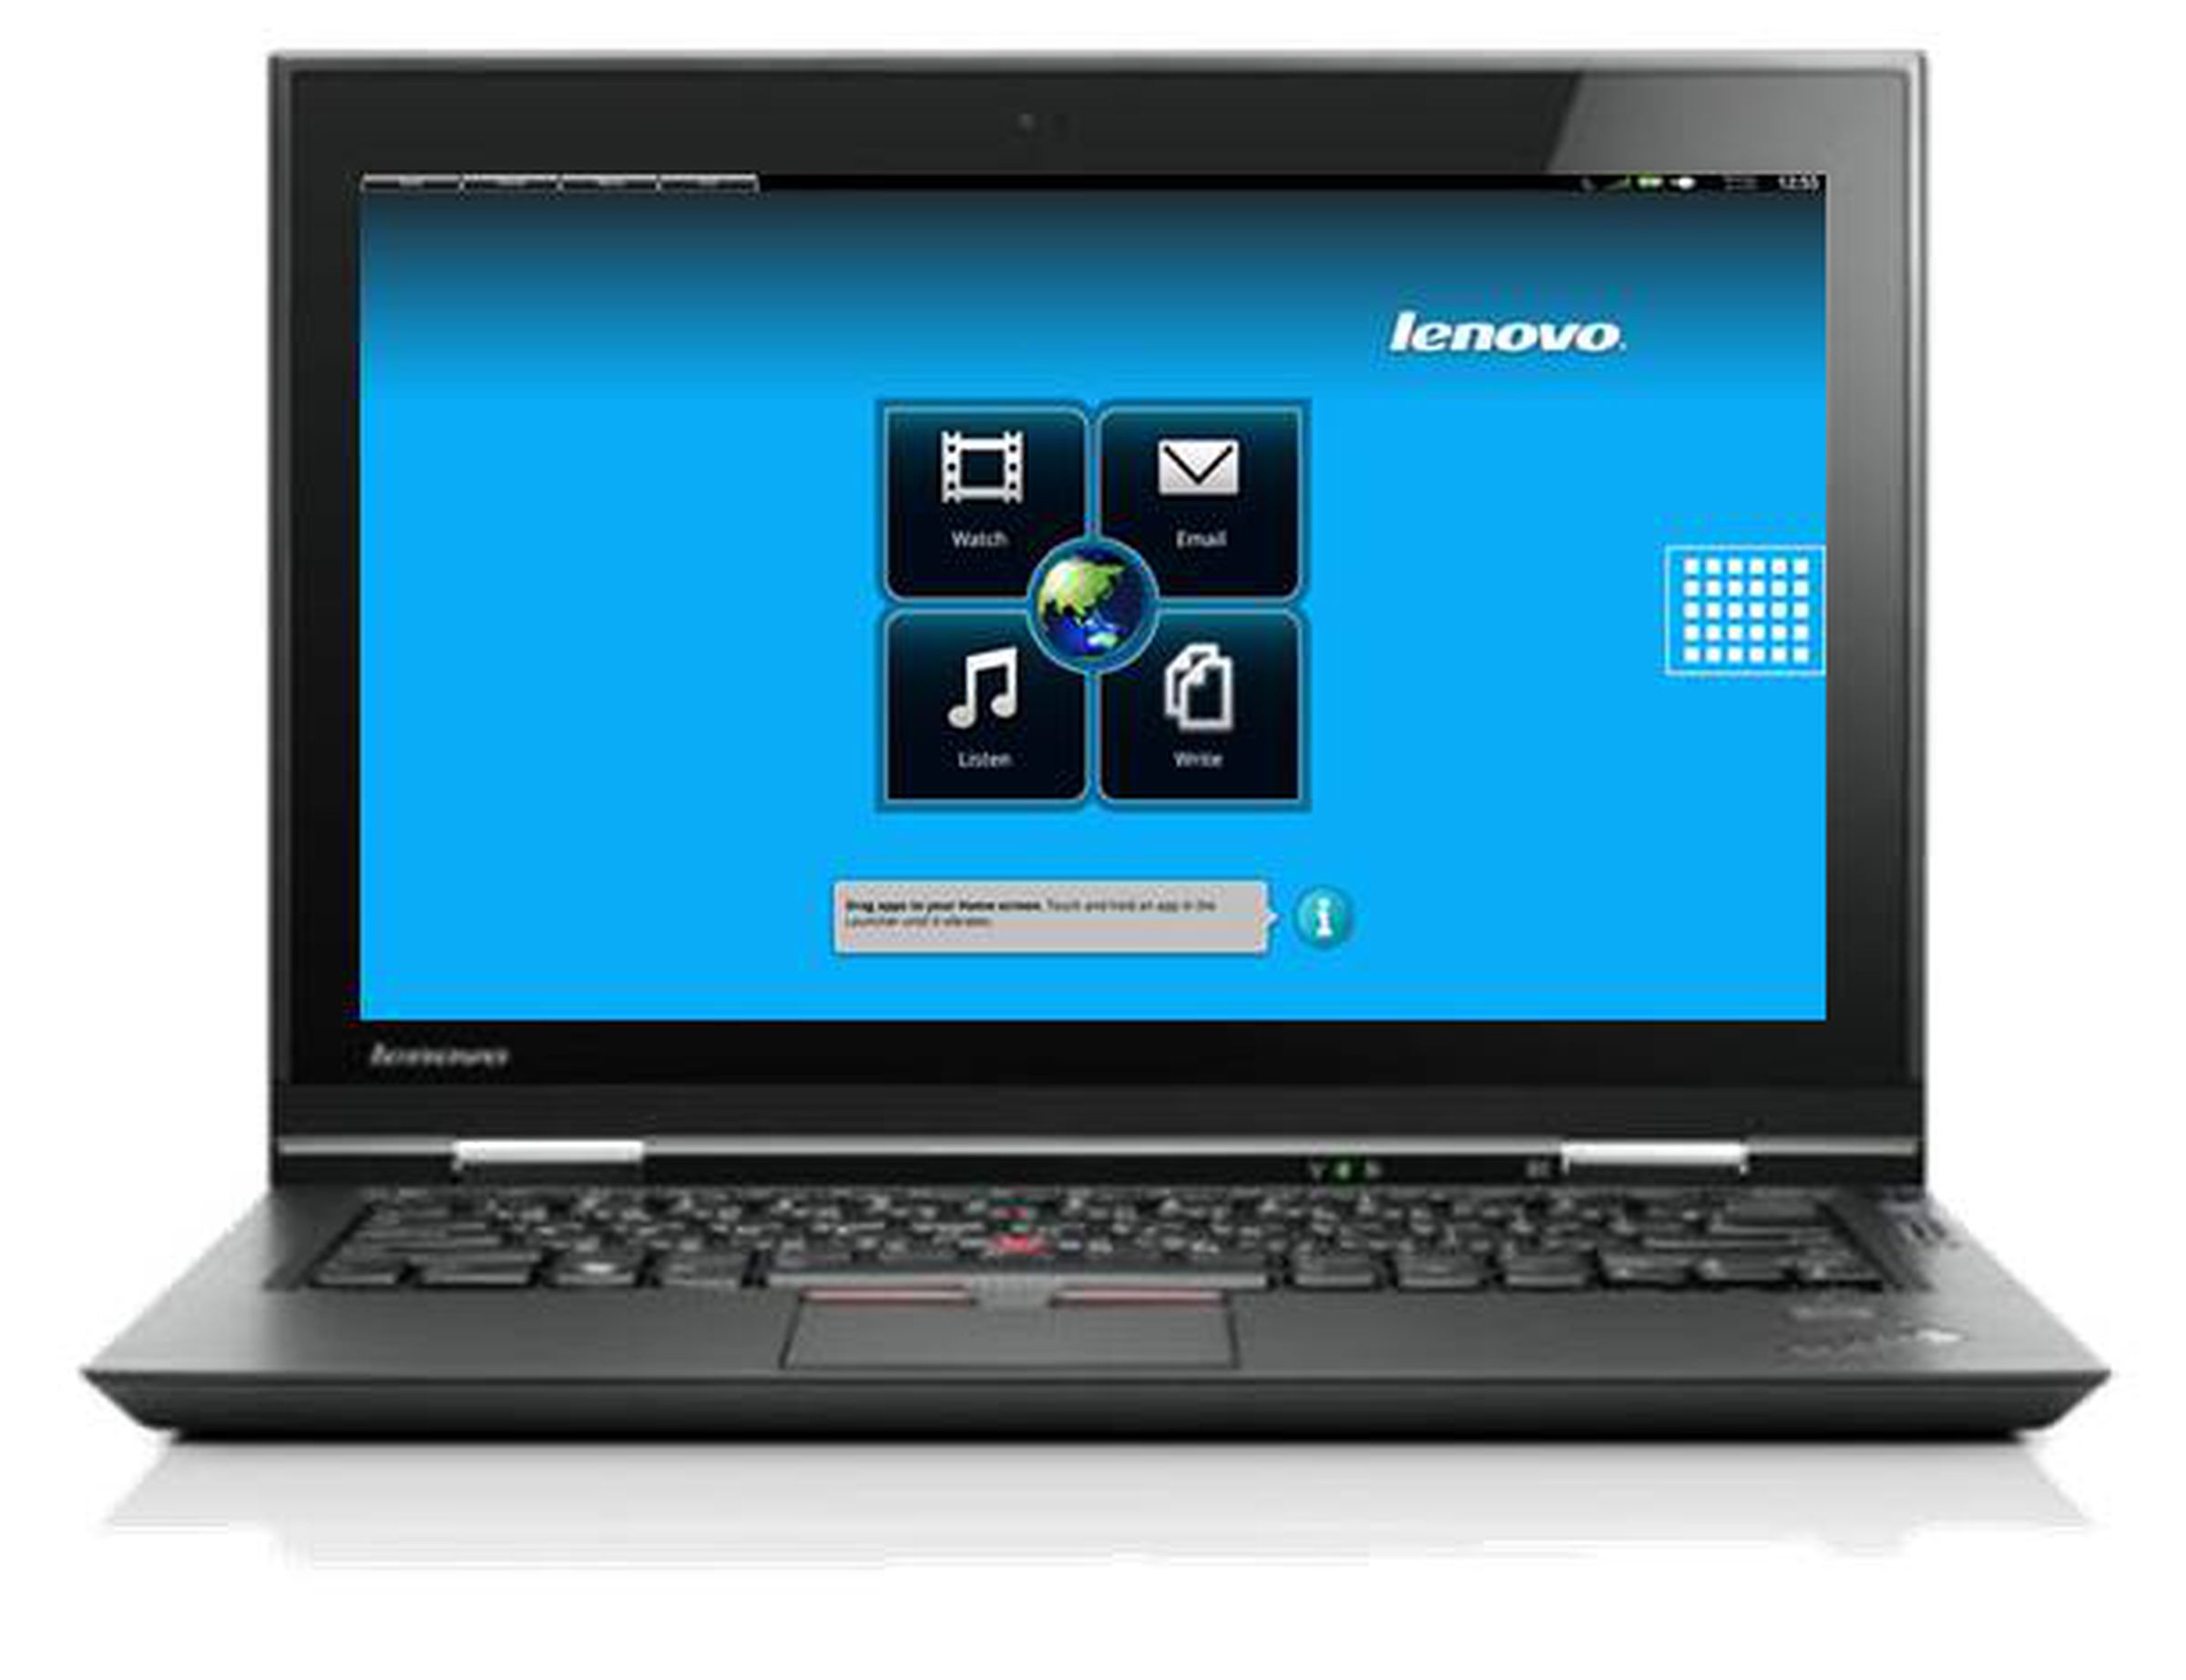 Lenovo ThinkPad X1 Hybrid press photos